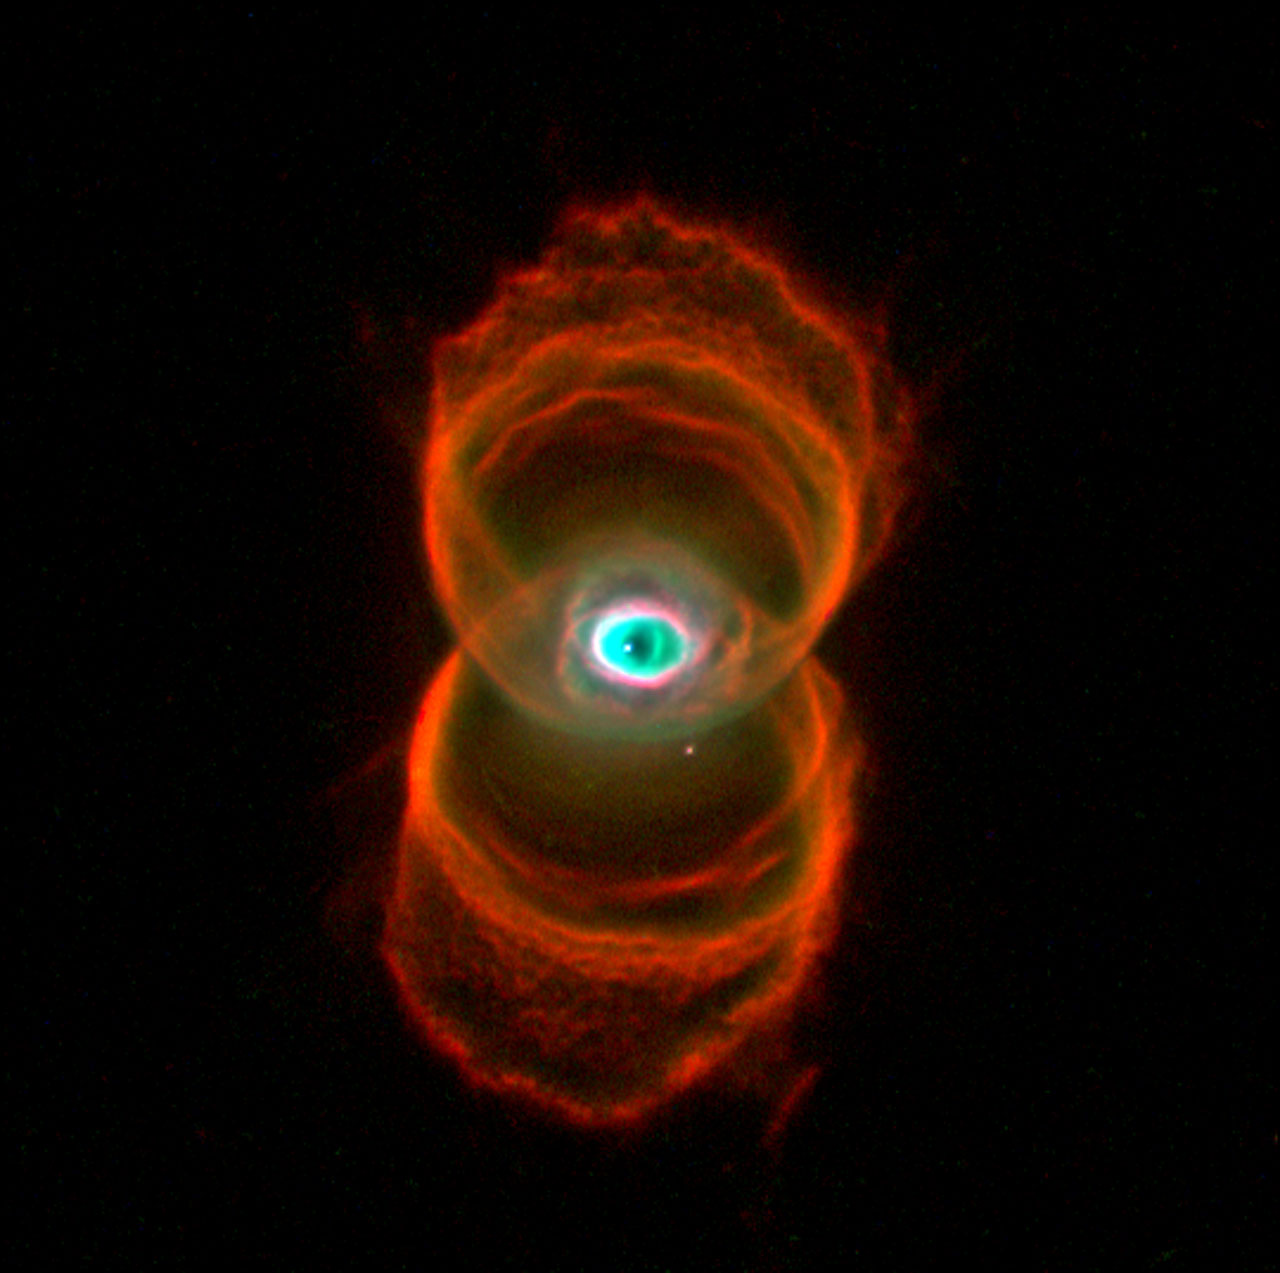 The Hourglass Nebula | ESA/Hubble